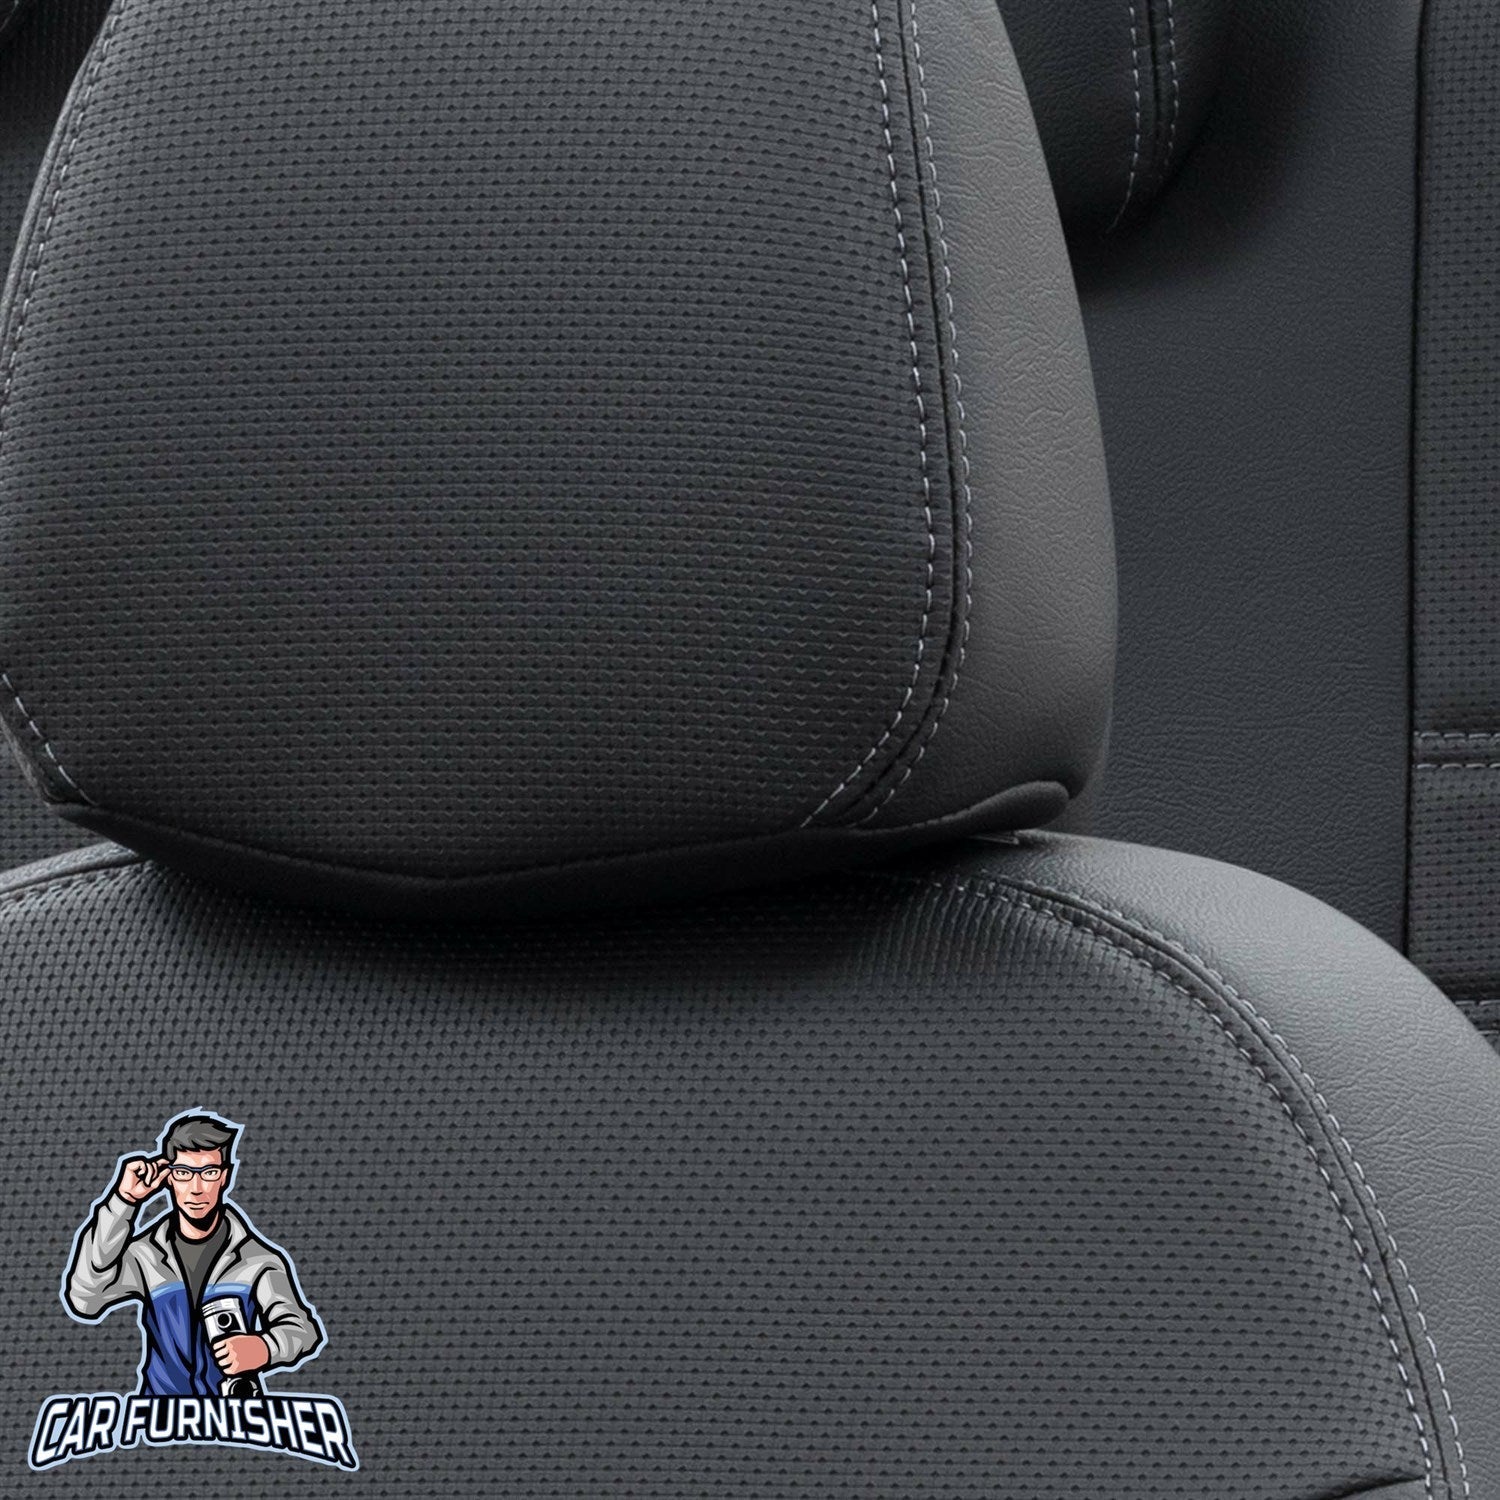 Opel Grandland Seat Covers New York Leather Design Black Leather